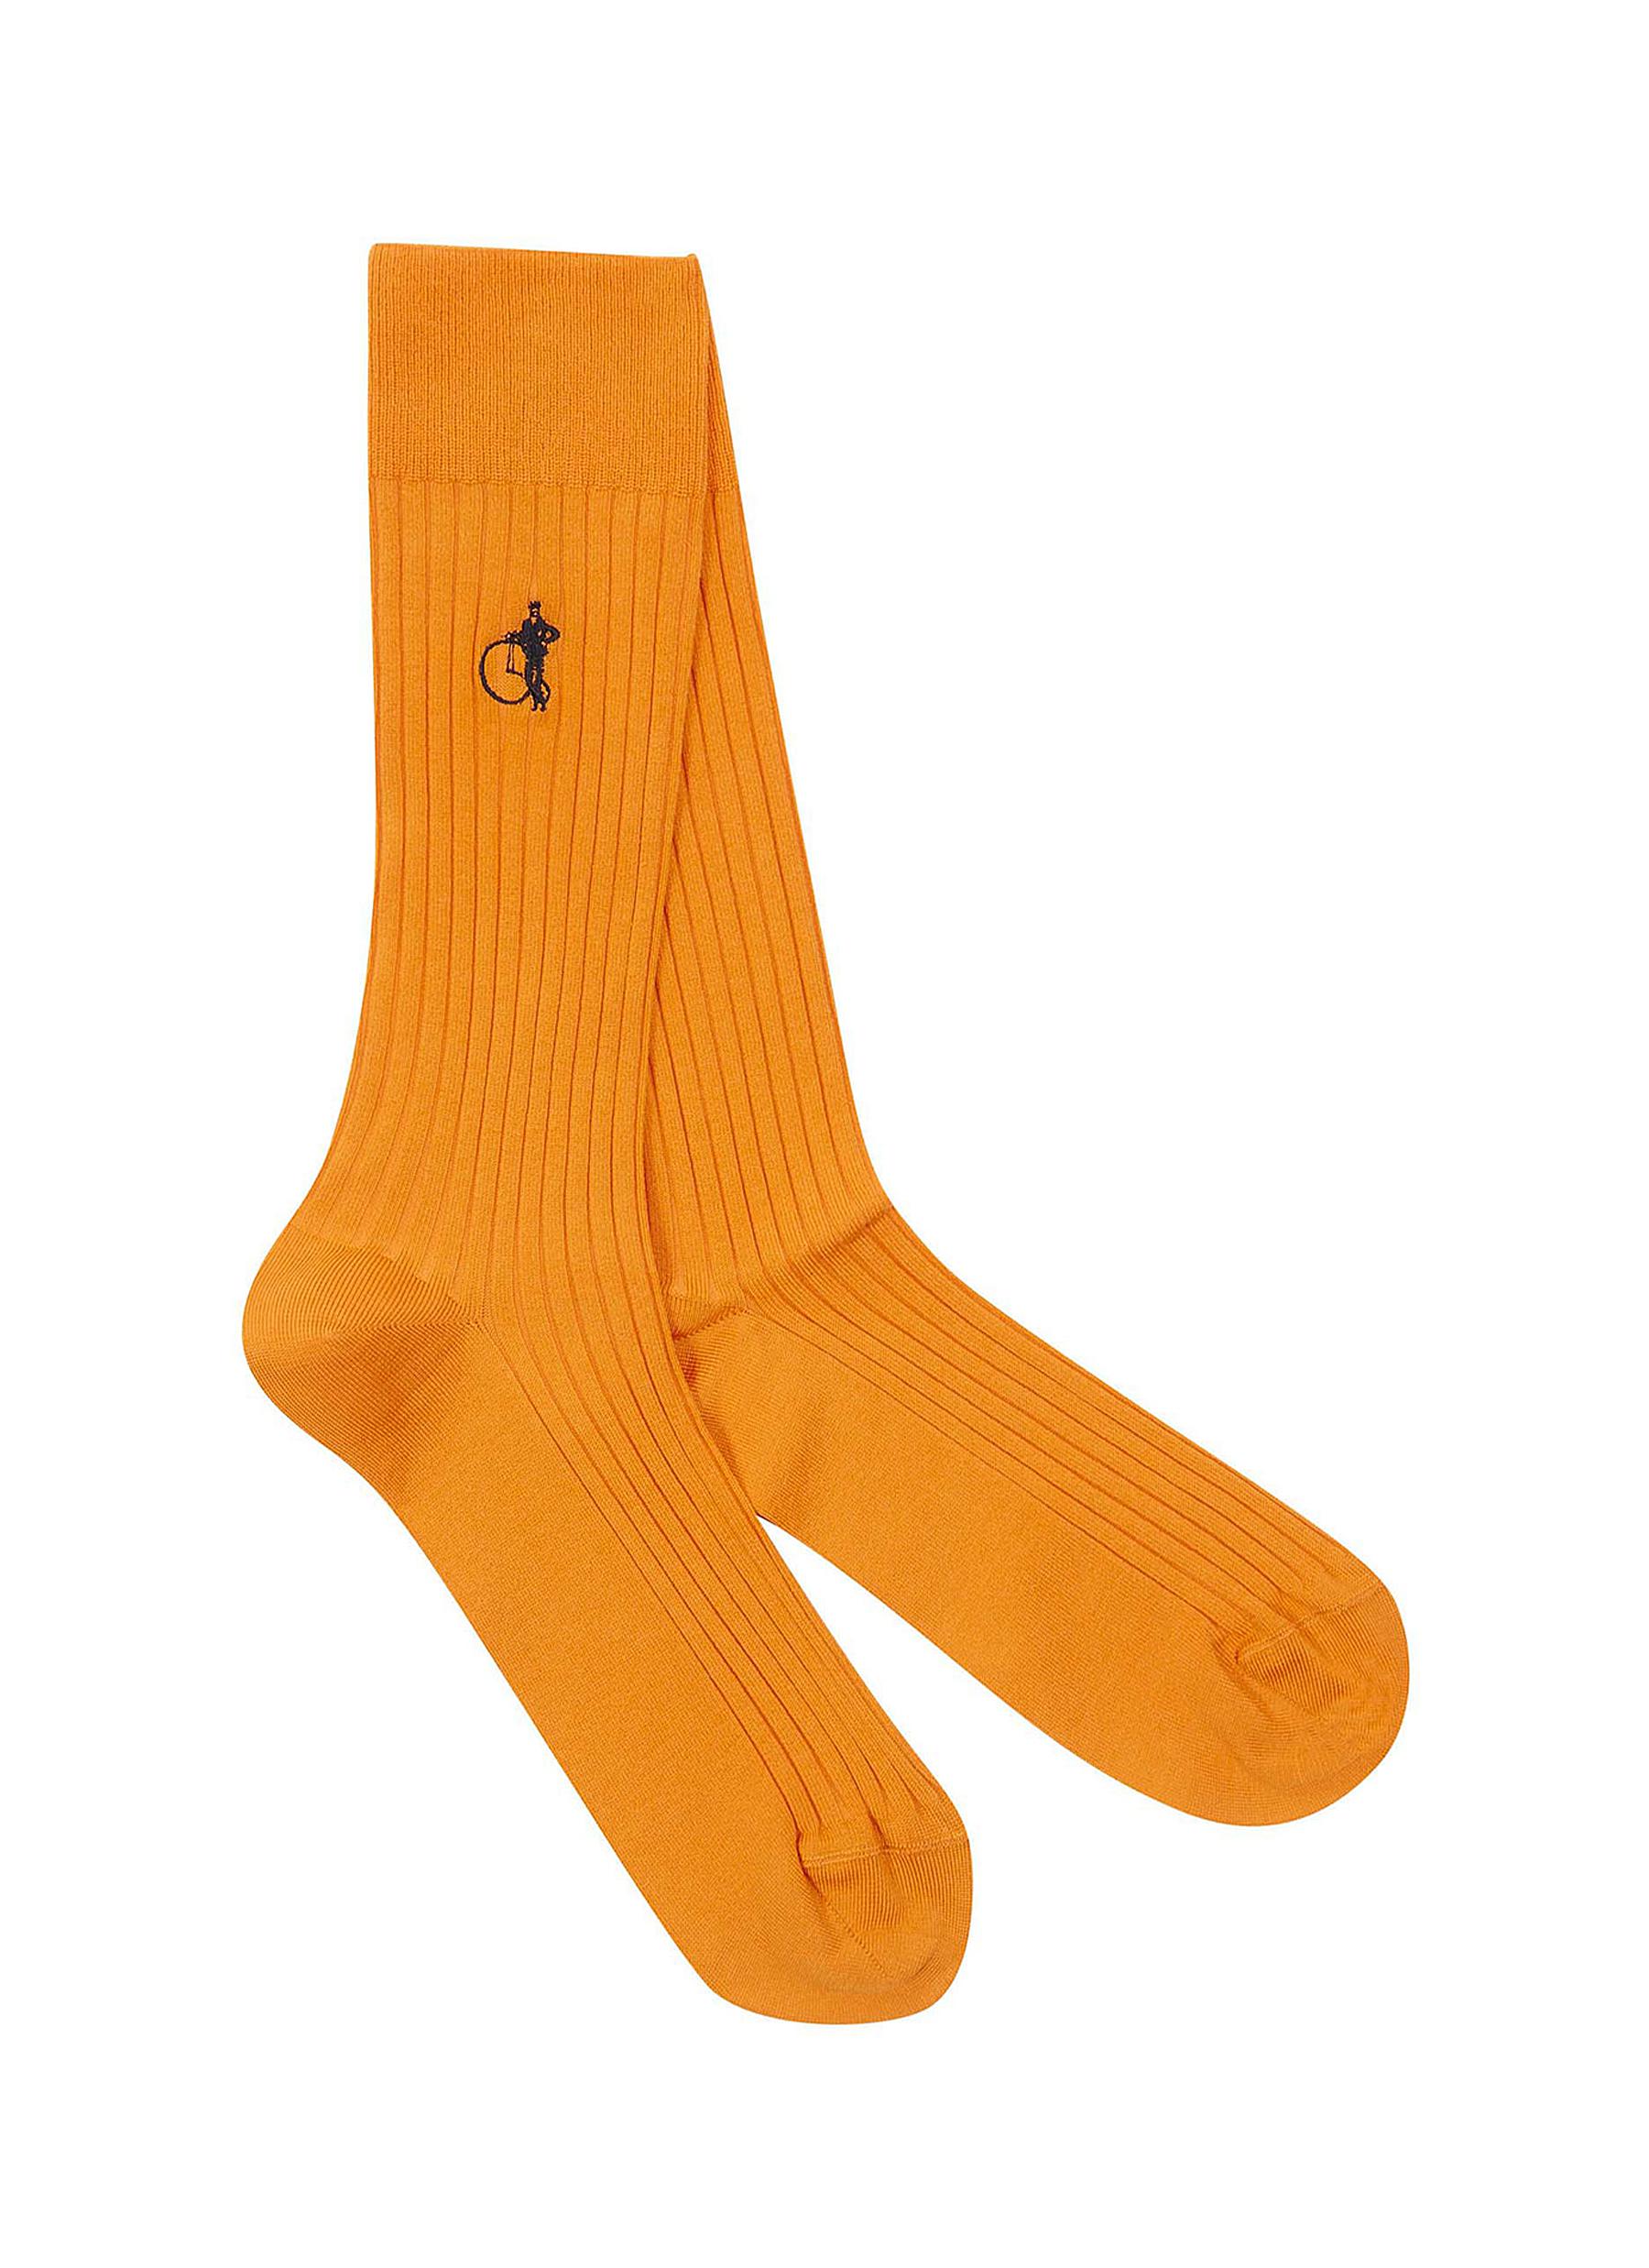 Simply Sartorial Mid-Calf Socks